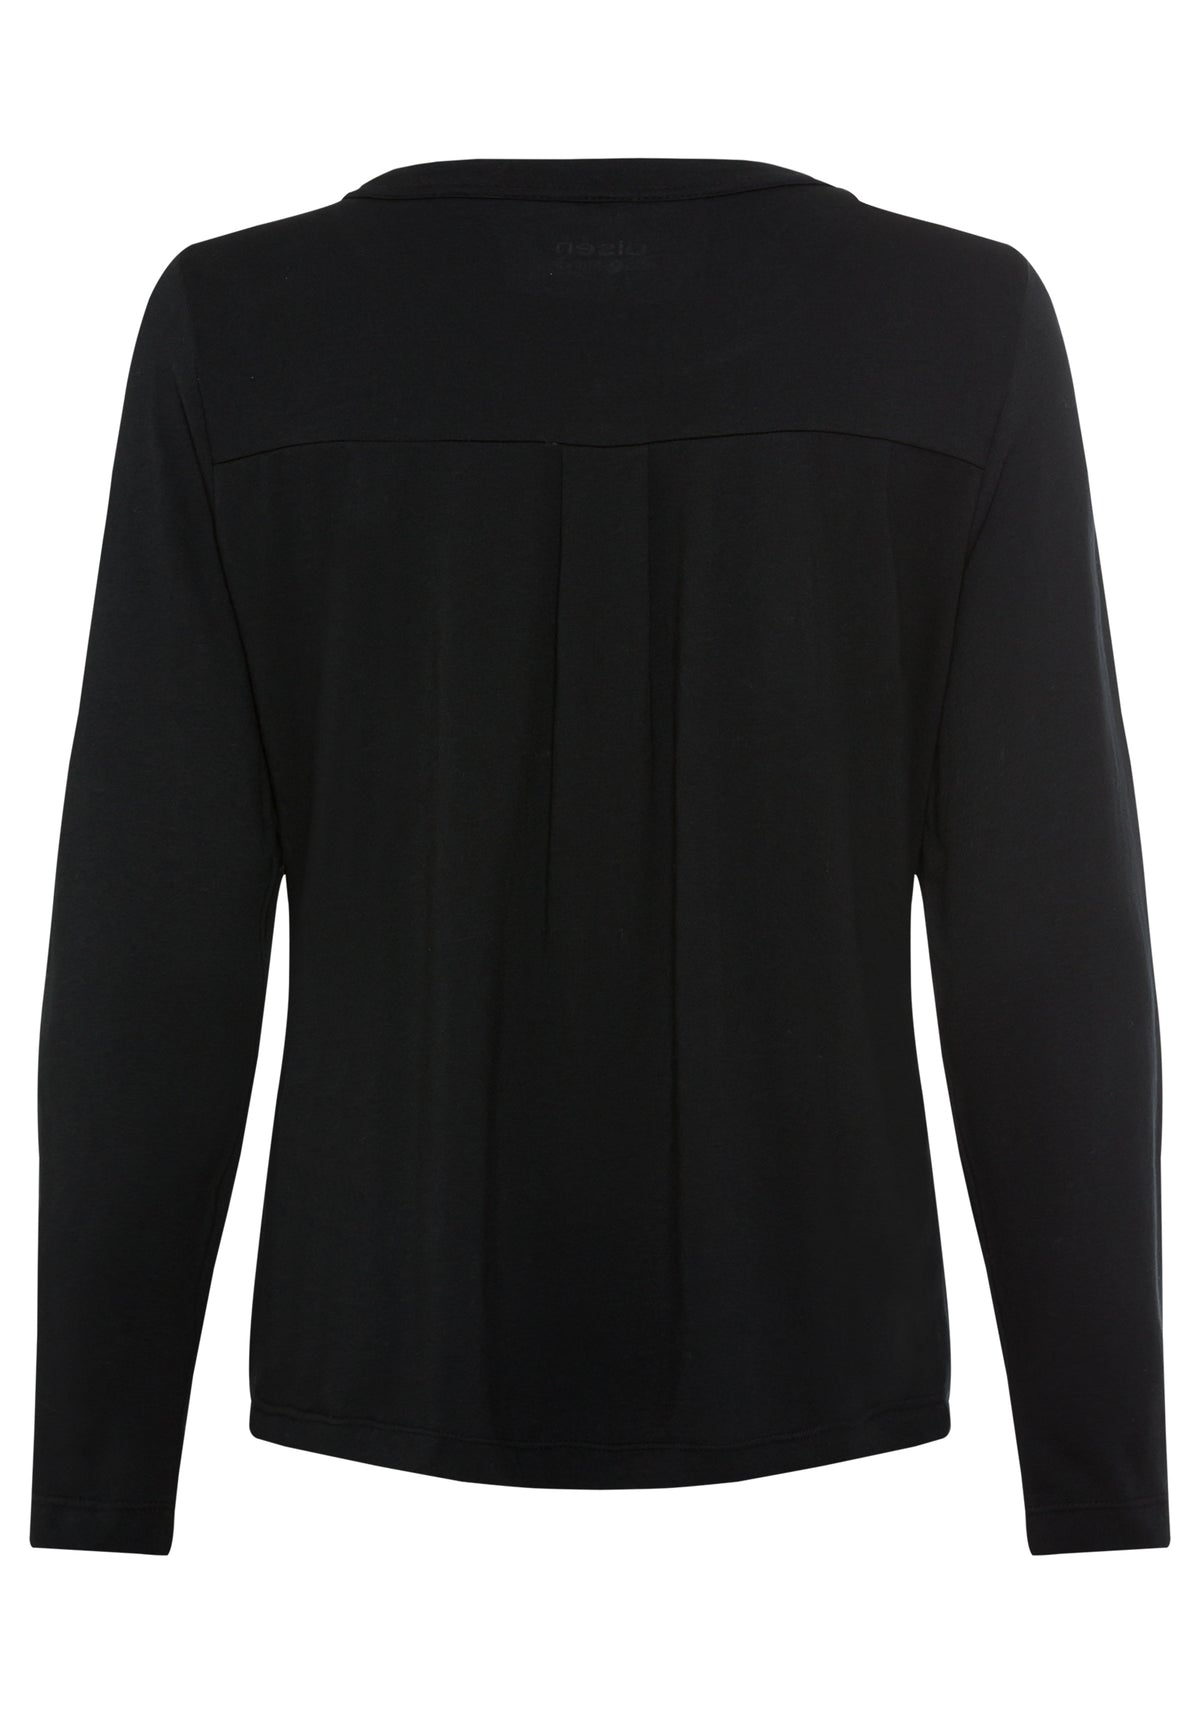 Cotton Blend Long Sleeve Sequin T-Shirt containing TENCEL™ Modal